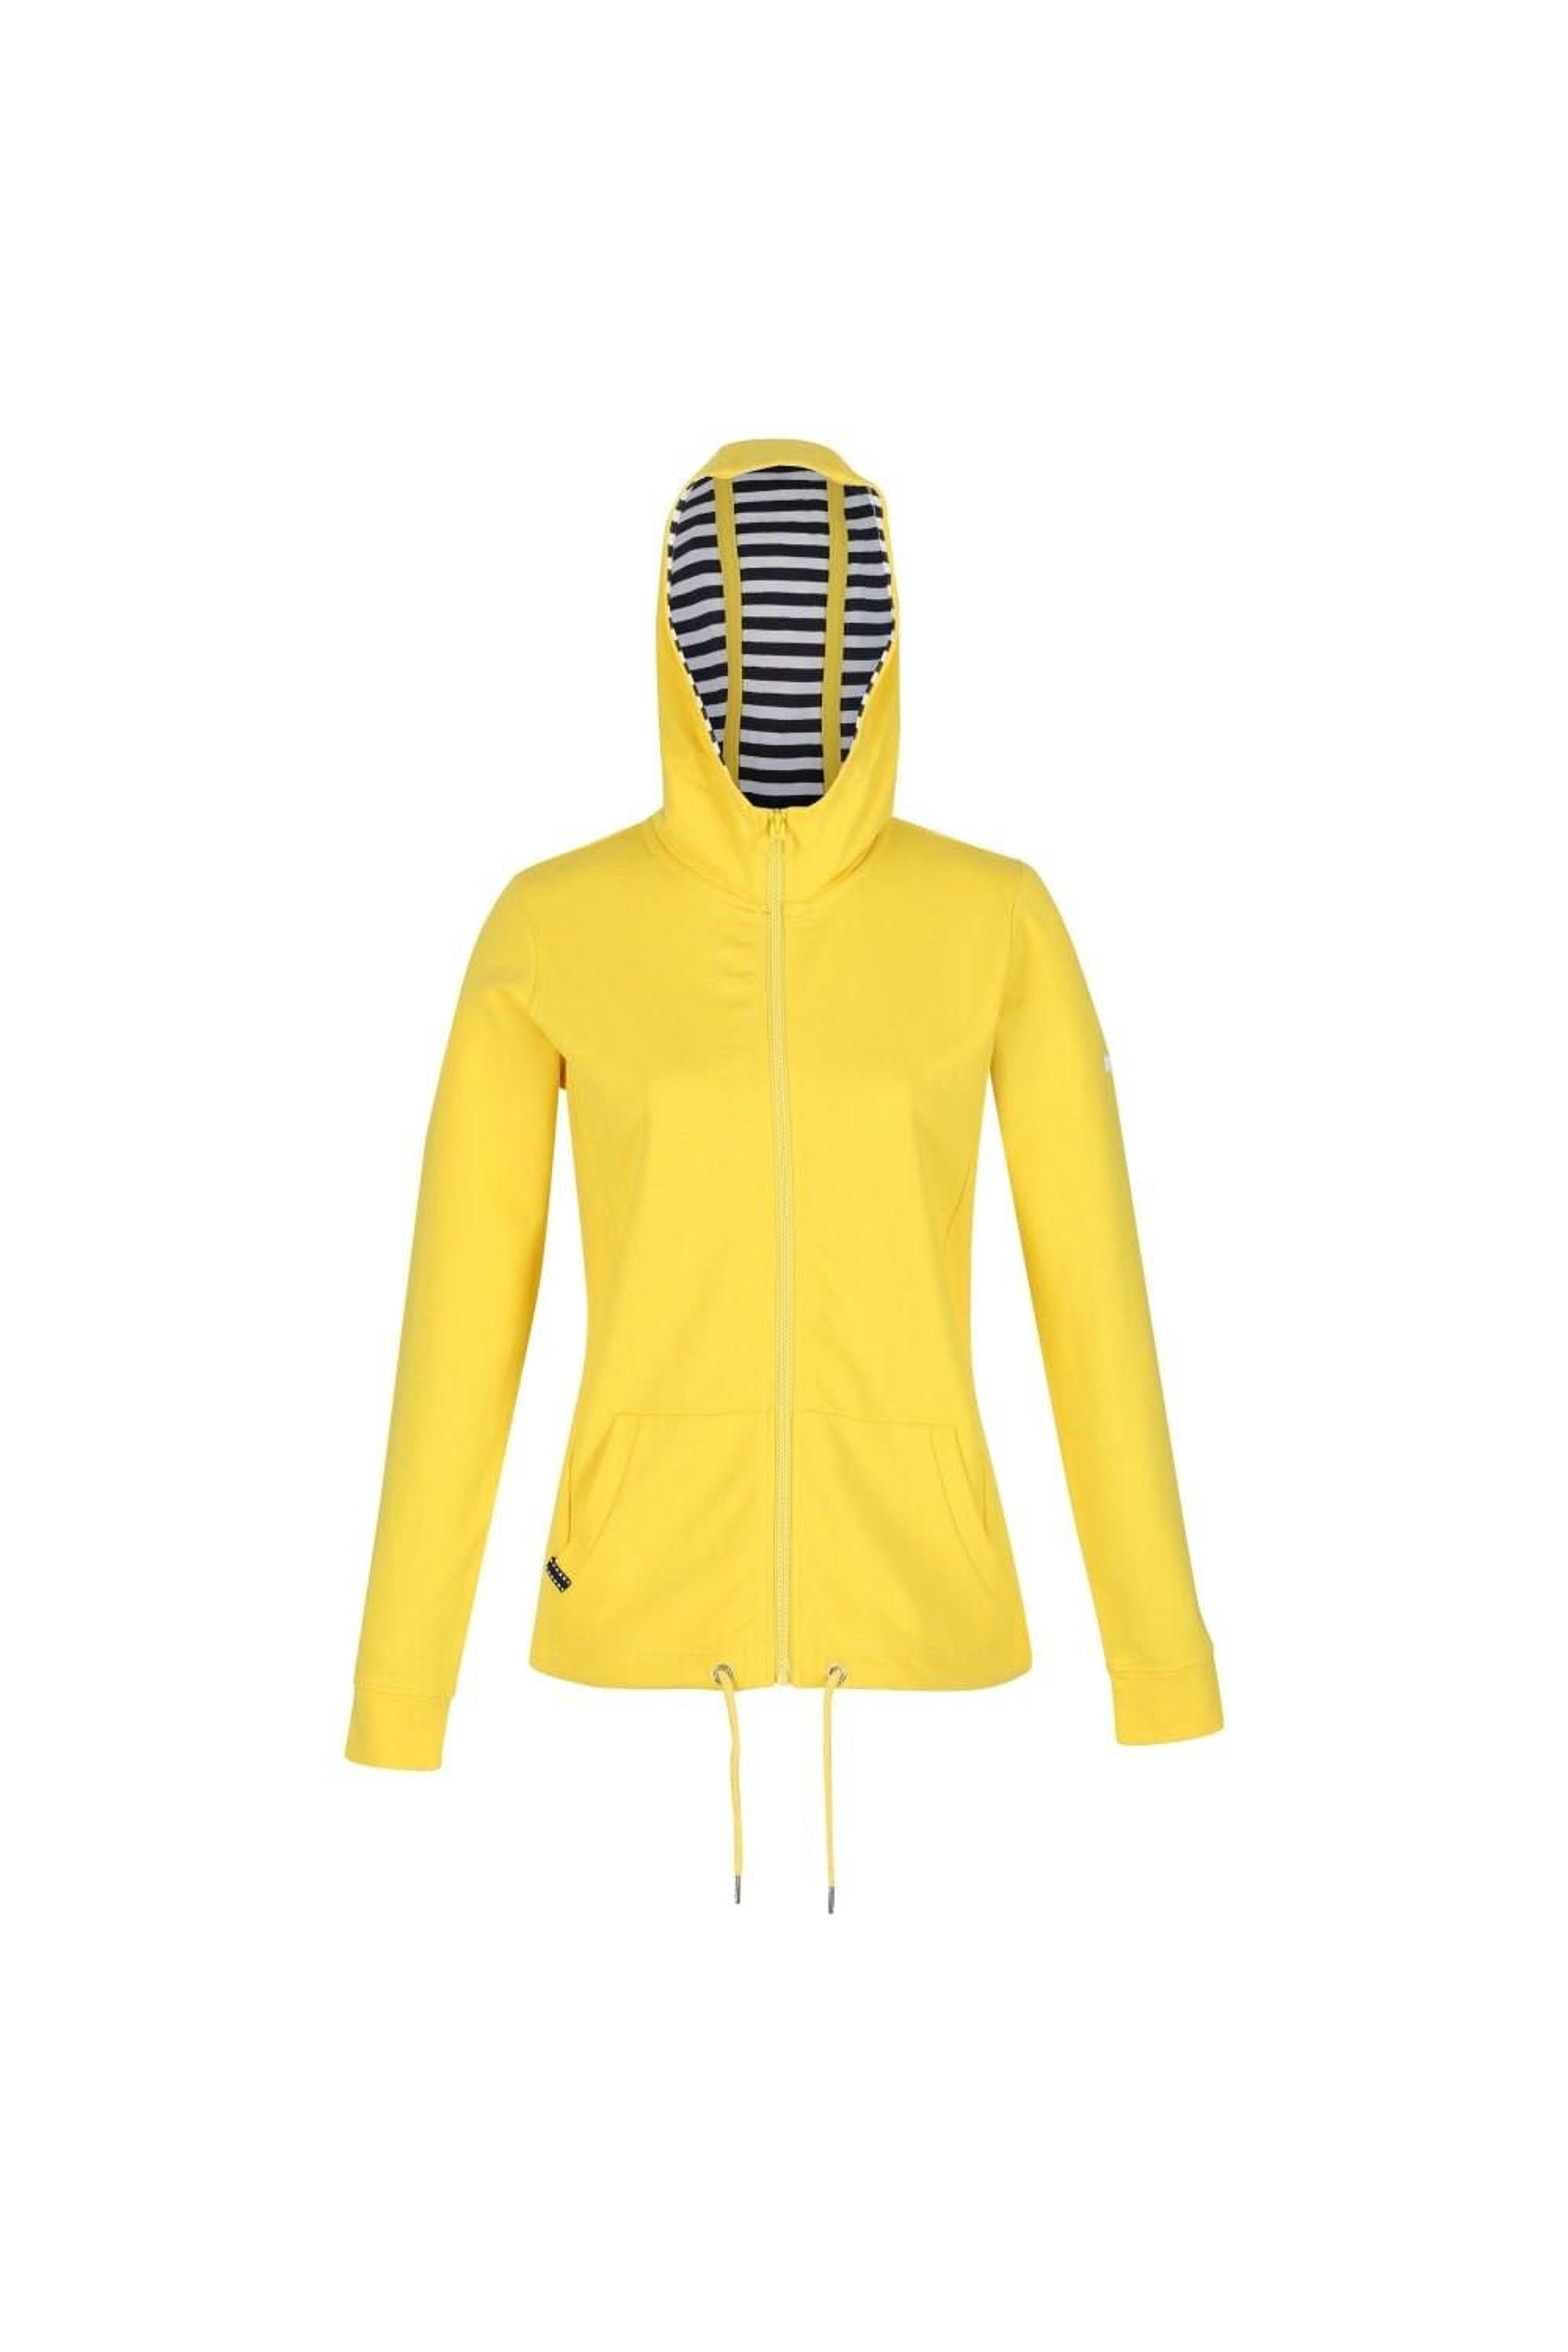 Regatta Bayarma Full Zip Hoodie in Yellow | Lyst